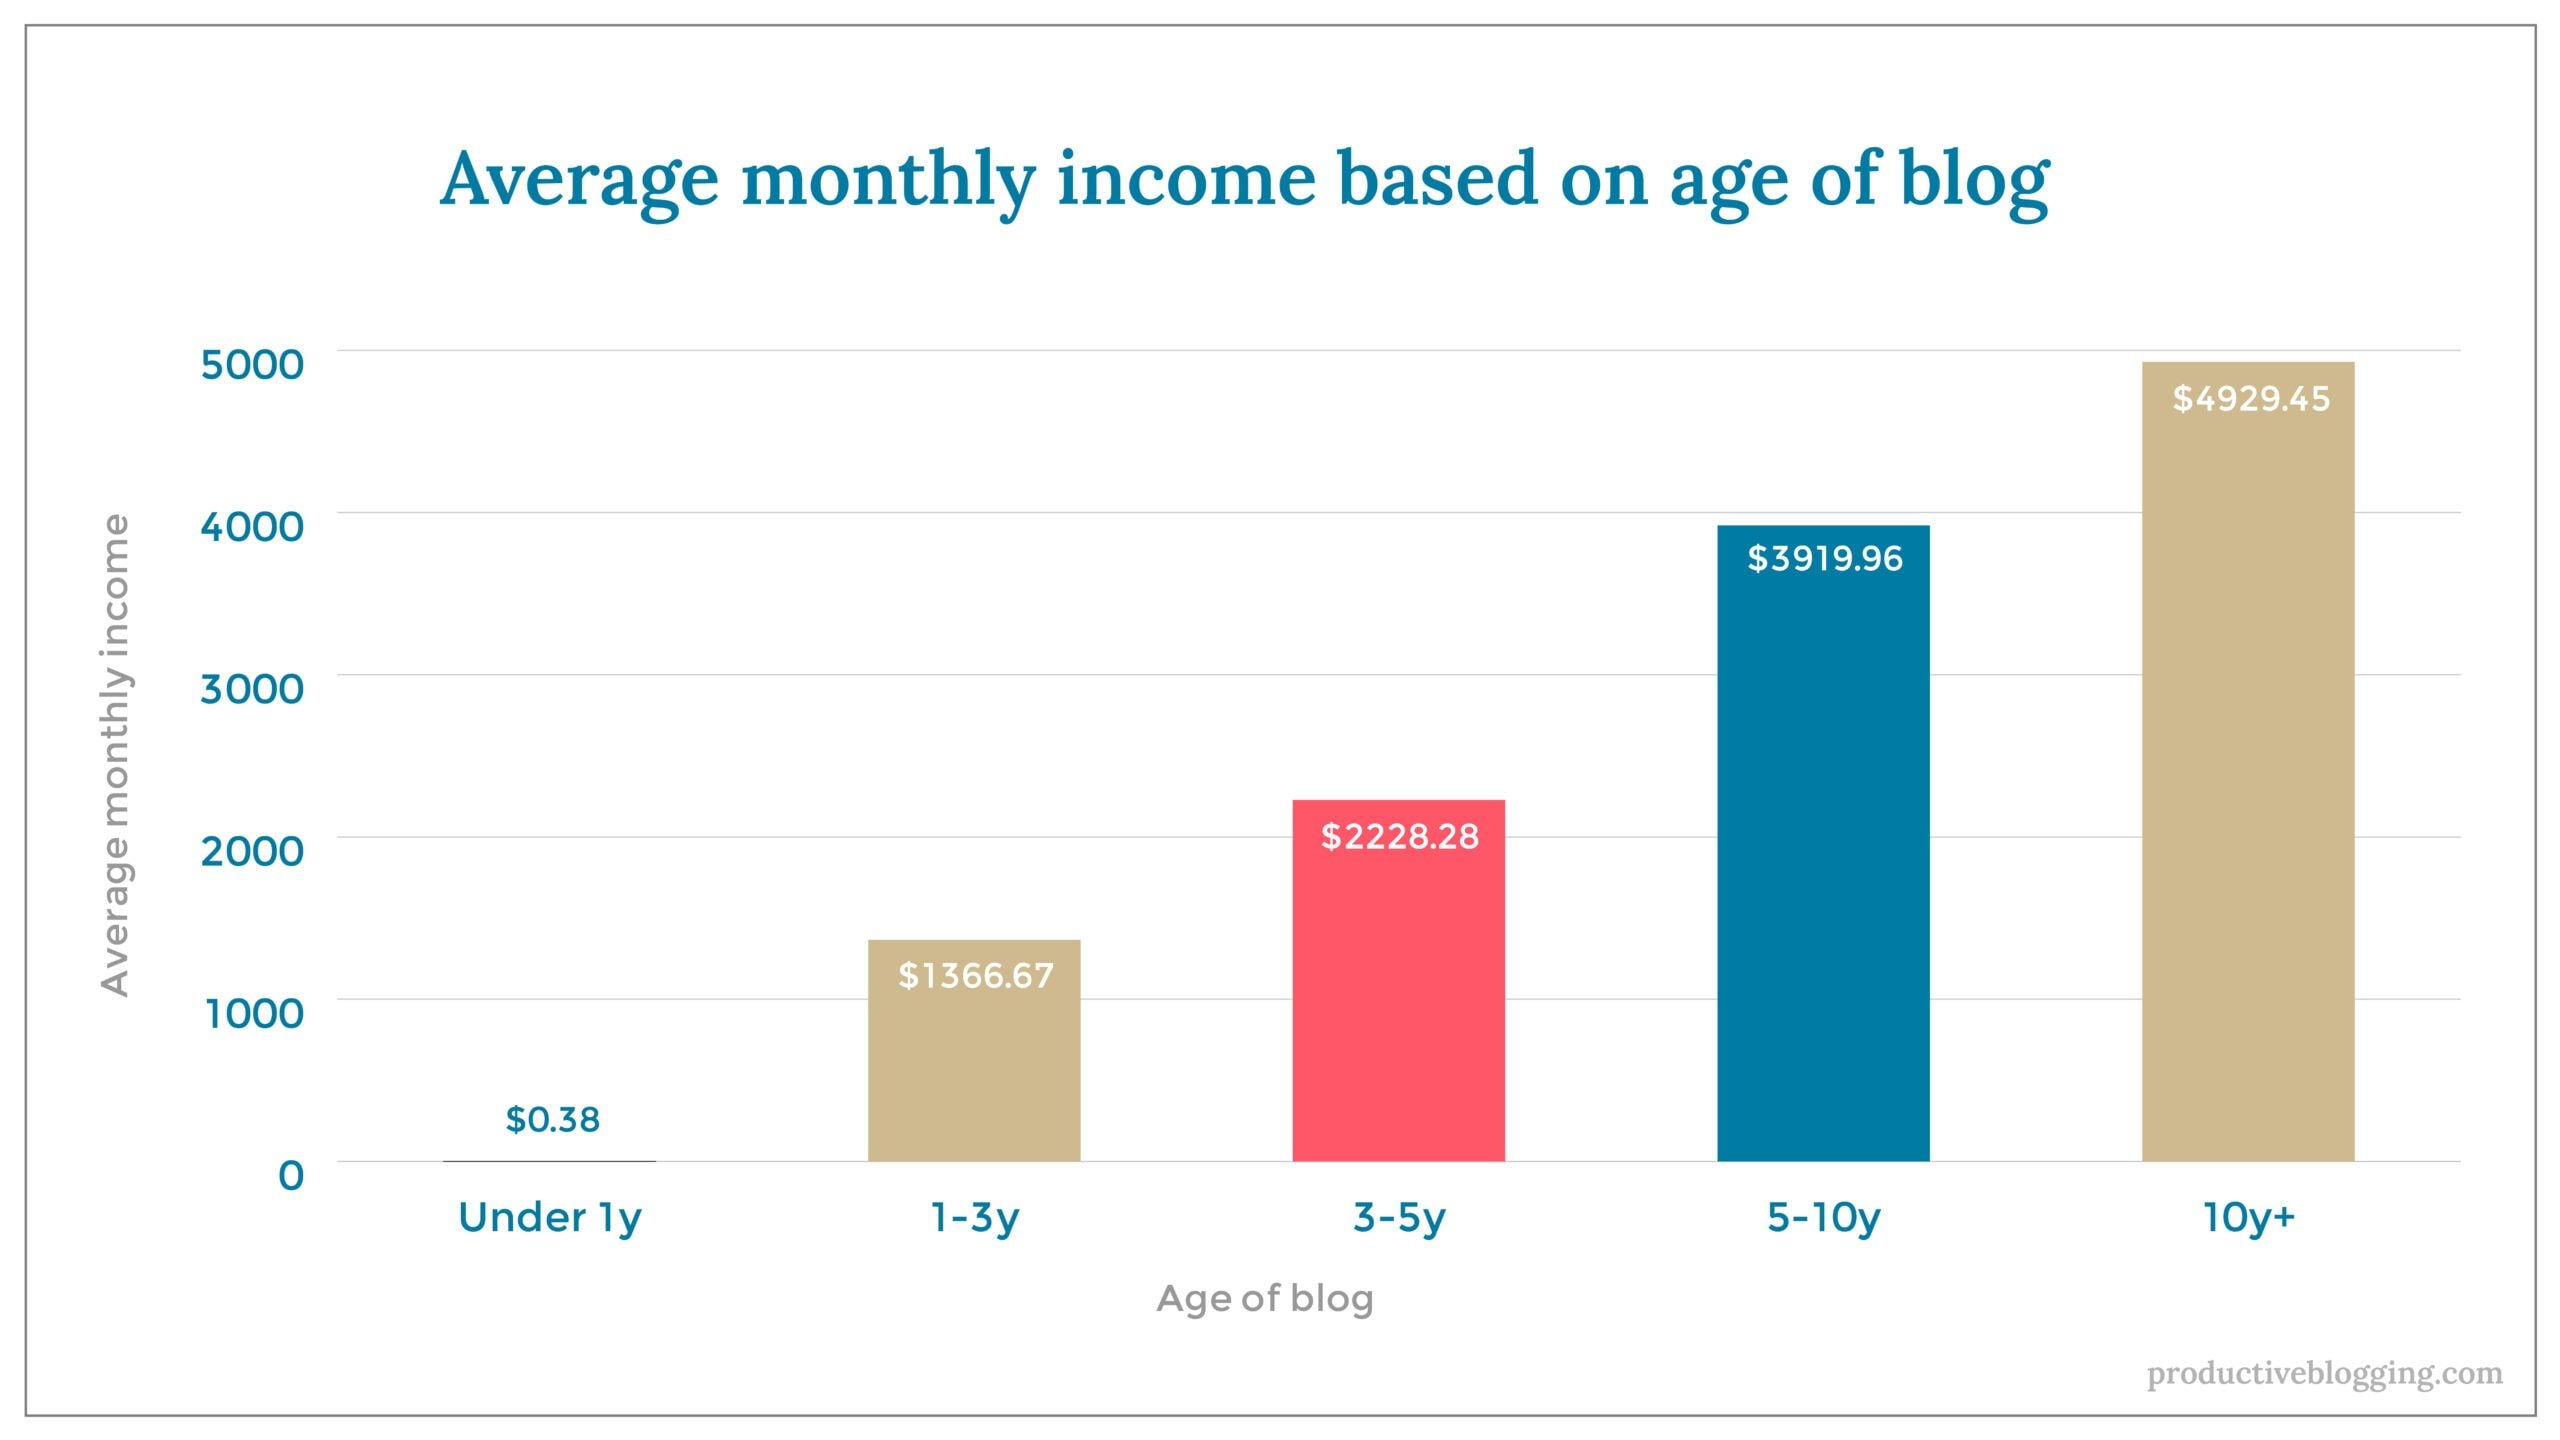 Average monthly income based on age of blog X axis: Age of blog Y axis: Average monthly income Under 1y $0.38 1-3y $1,366.67 3-5y $2,228.28 5-10y $3,919.96 10y+ $4,929.45